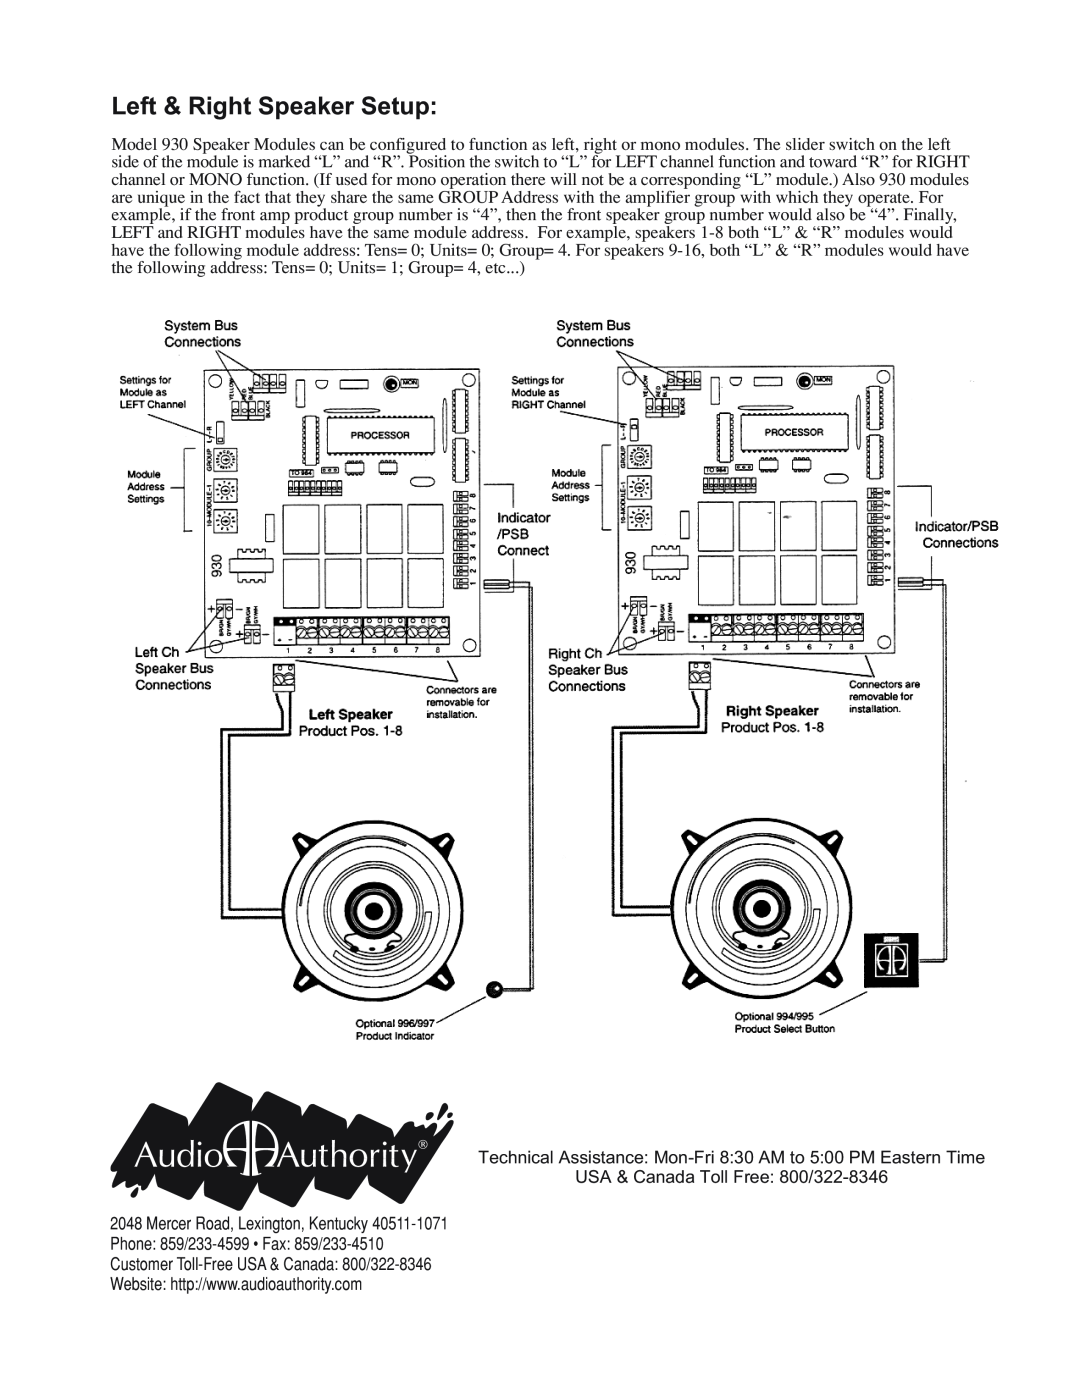 Audio Authority 930 manual Left & Right Speaker Setup, USA & Canada Toll Free 800/322-8346 